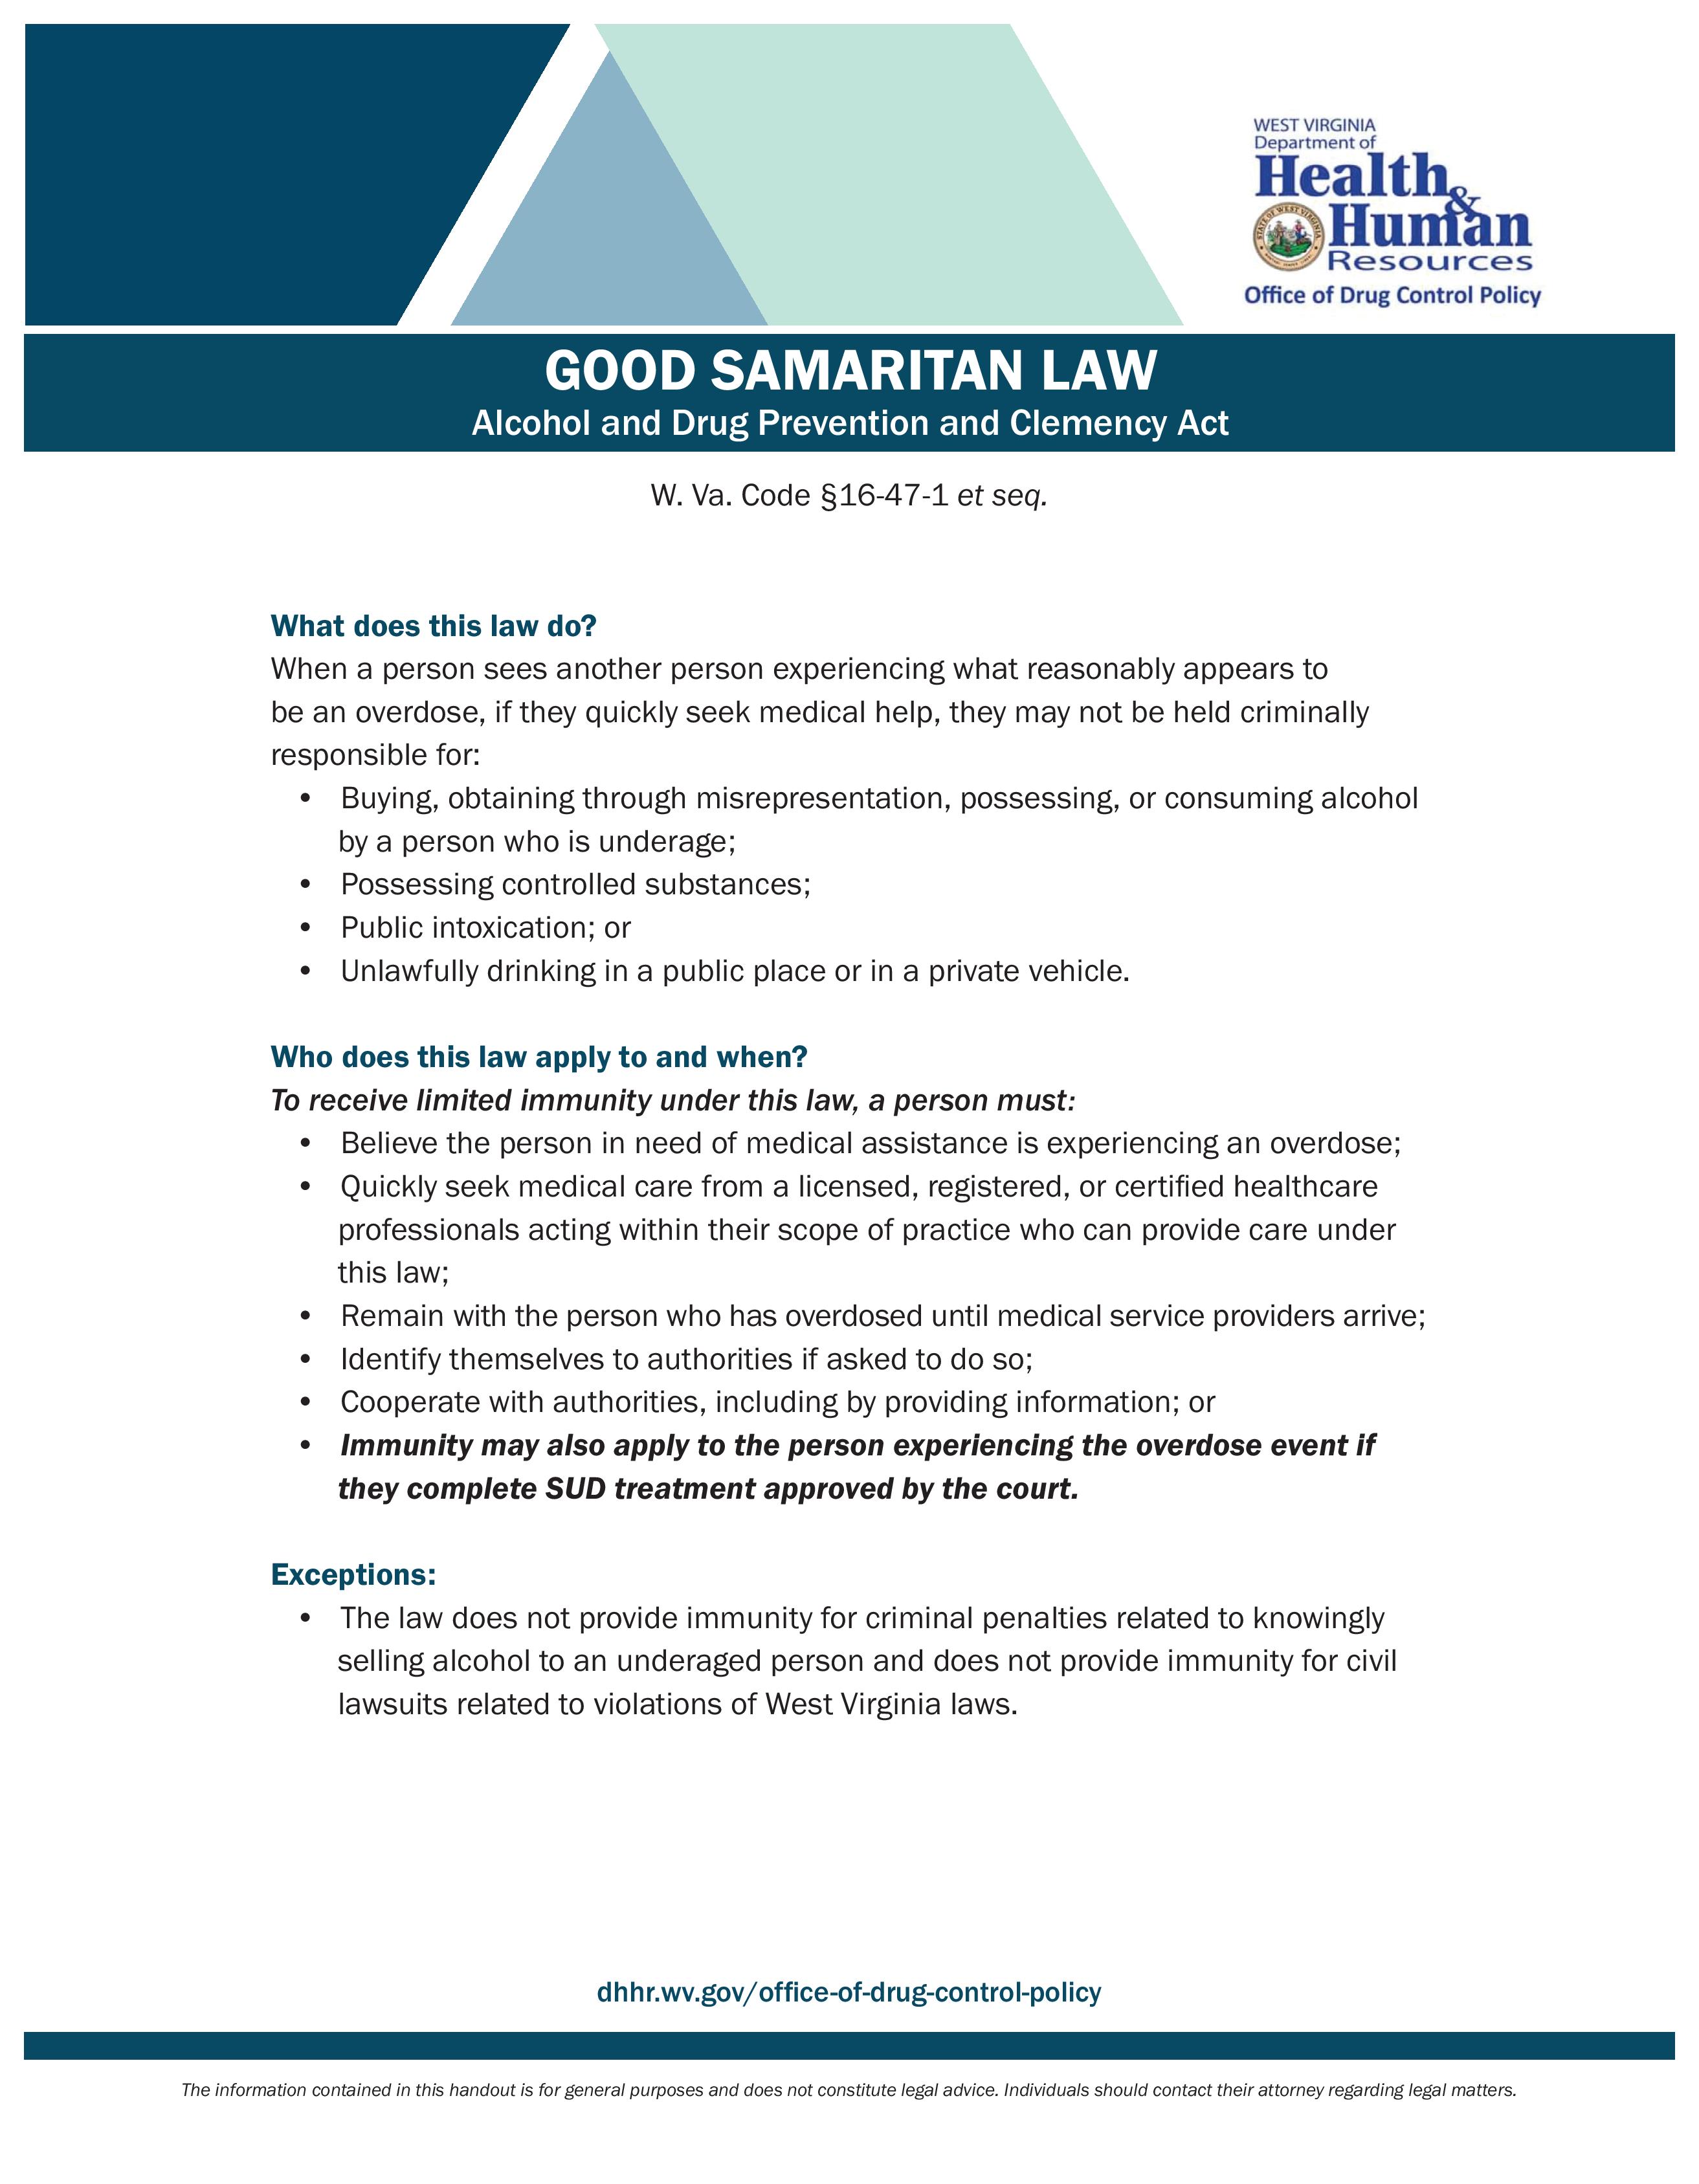 Good Samaritan Law Handout Final (1)-page-001.jpg